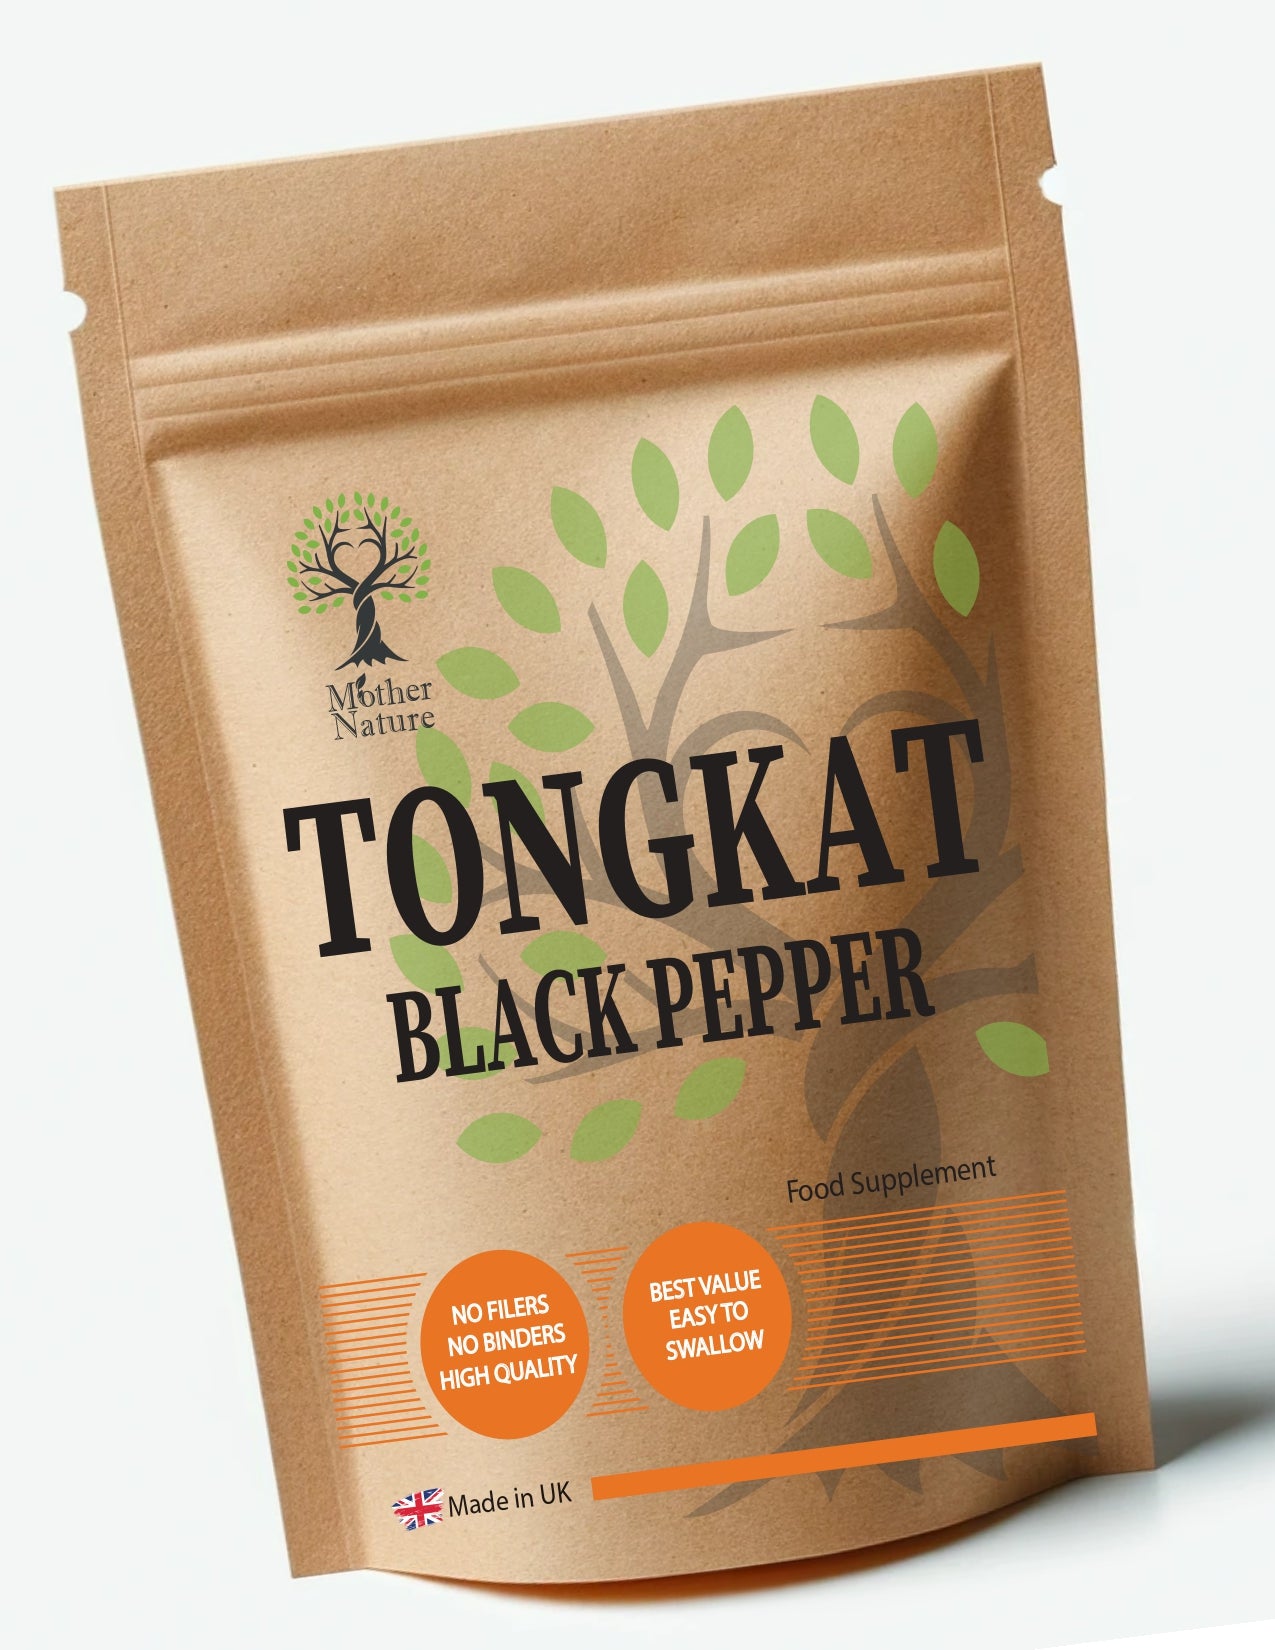 Tongkat Ali Black Pepper Mix High Strength Formula 35:1 Root Extract Malaysian Tongkat Ali Capsules 500mg Natural Supplements Vegan